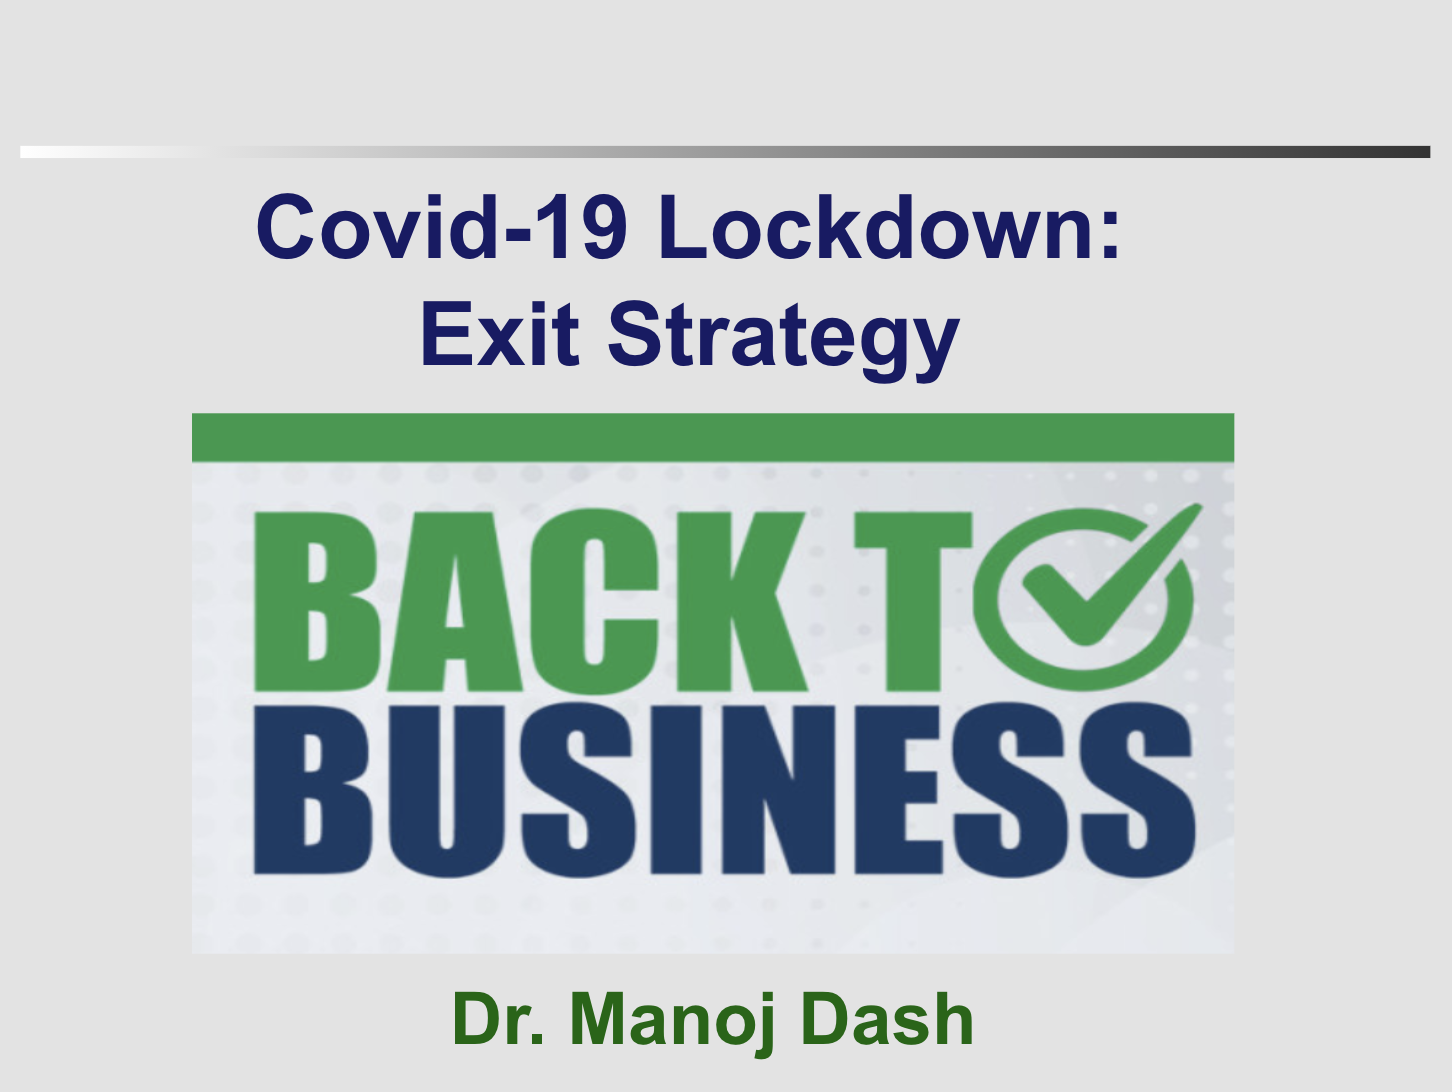 COVID-19 Lockdown : Exit Strategy by Dr Manoj Dash, Director, Odisha Dialogues